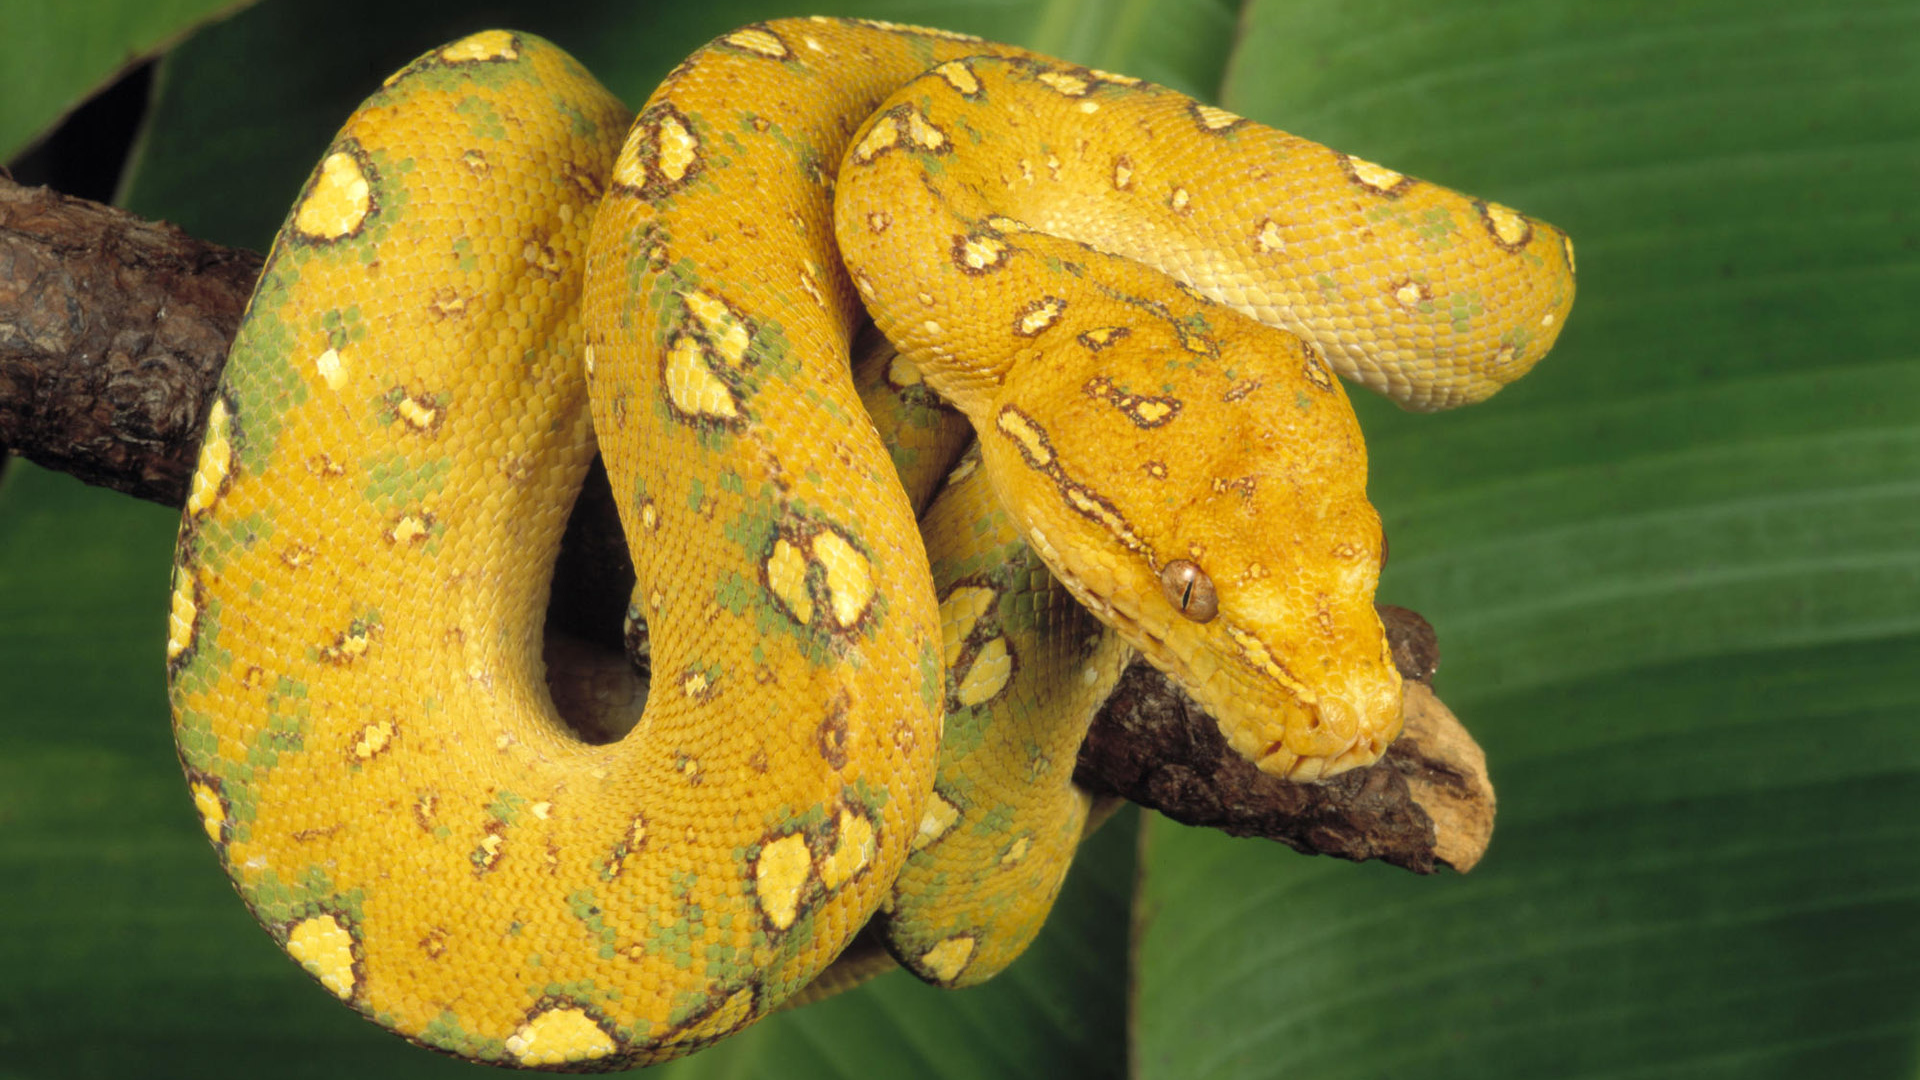 Yellow snake